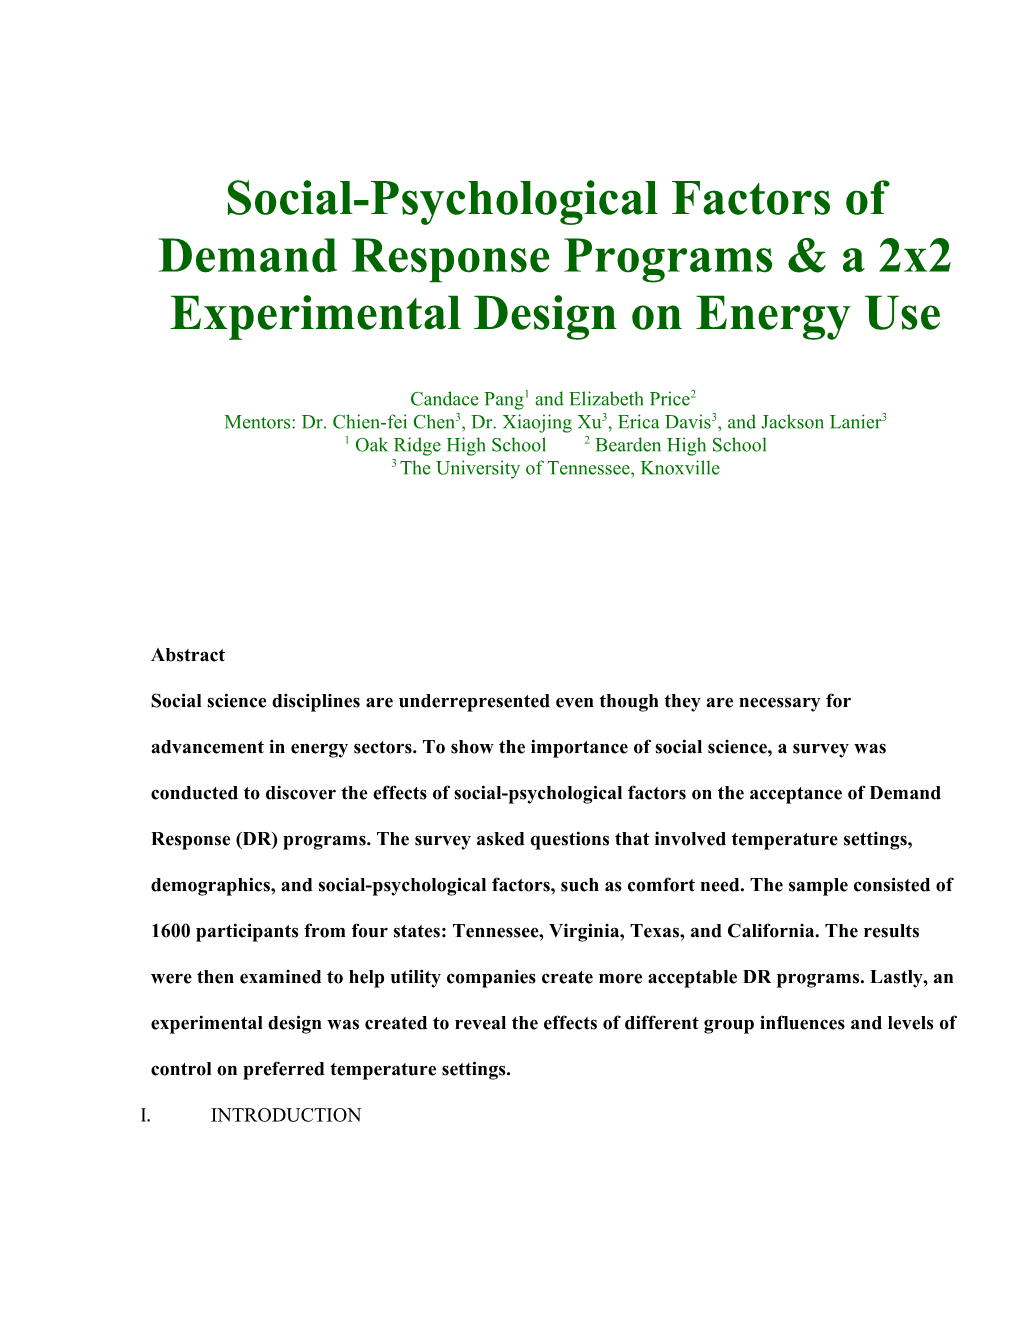 Social-Psychological Factors of Demand Response Programs & a 2X2 Experimental Design On